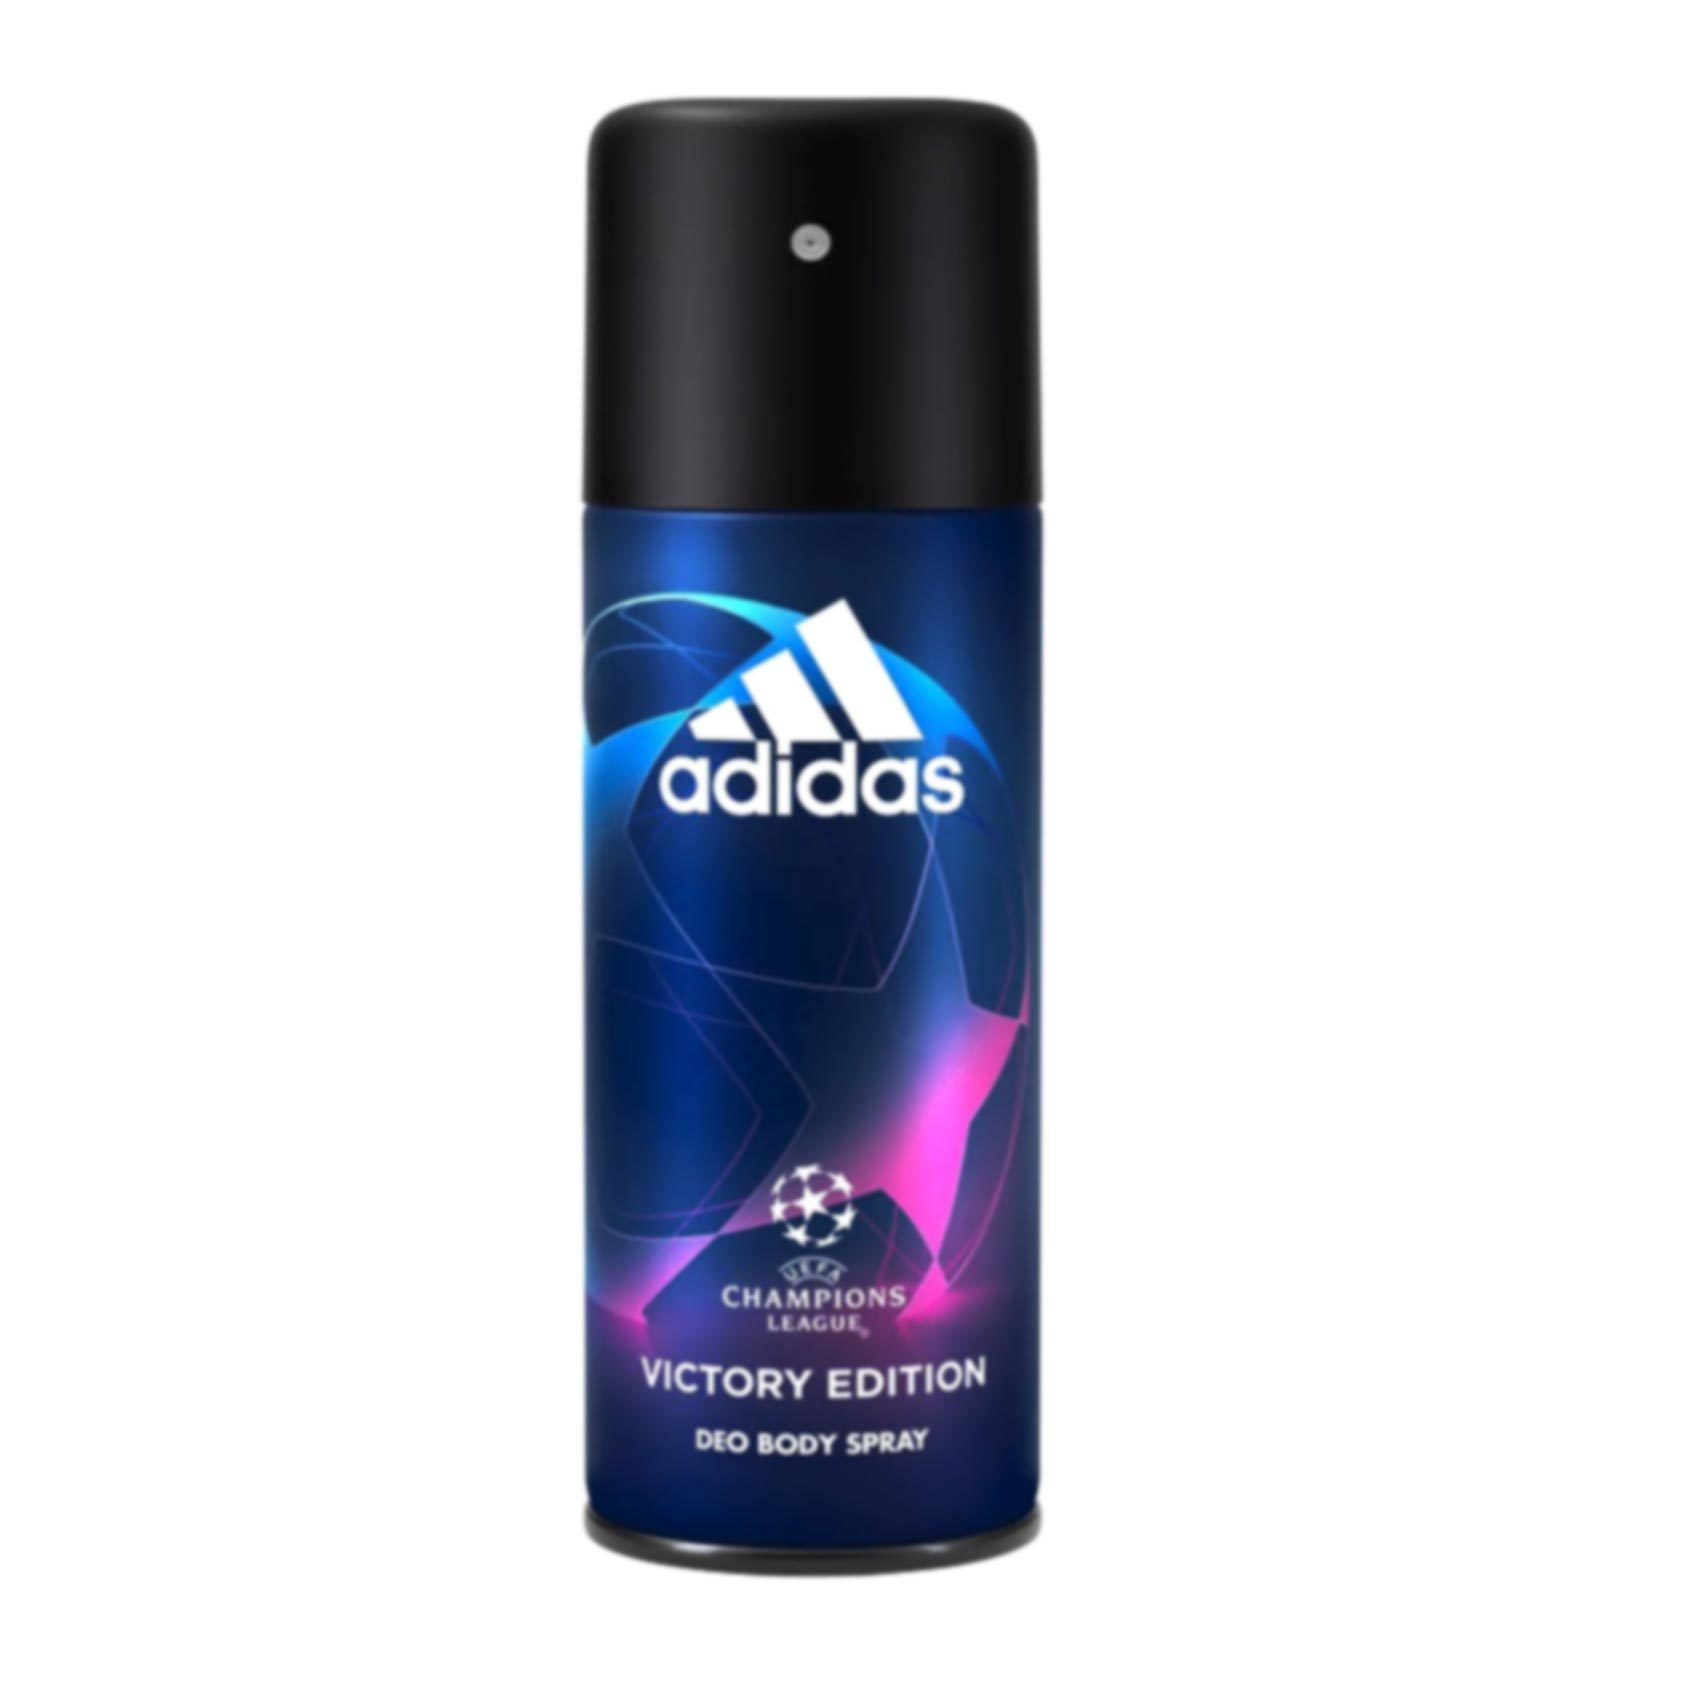 adidas champions edition deo body spray